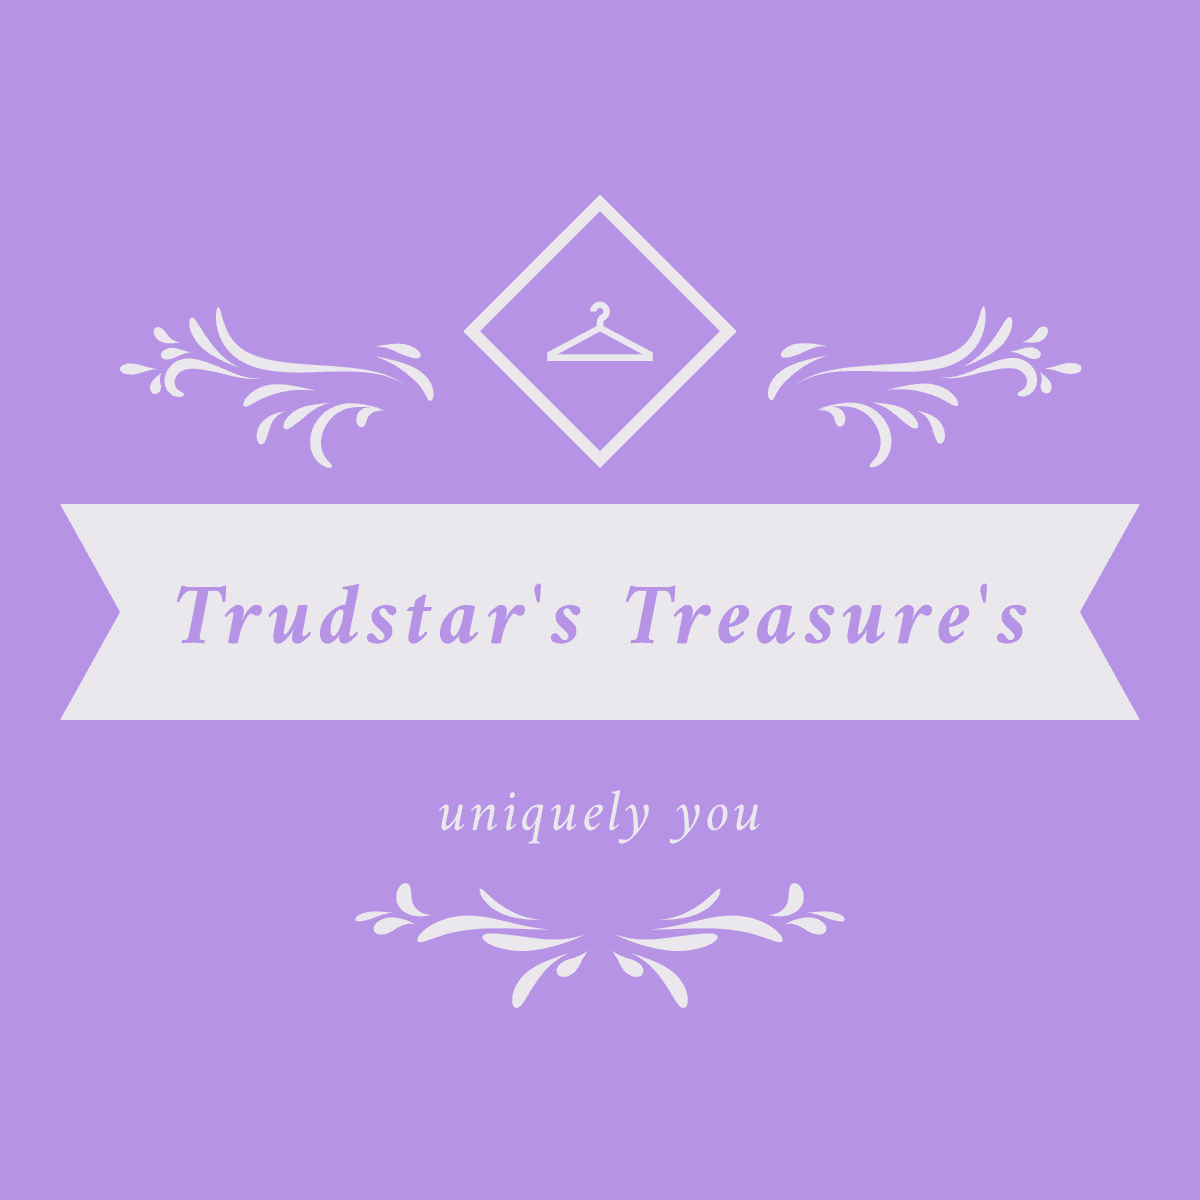 Trudstar’s Treasure’s